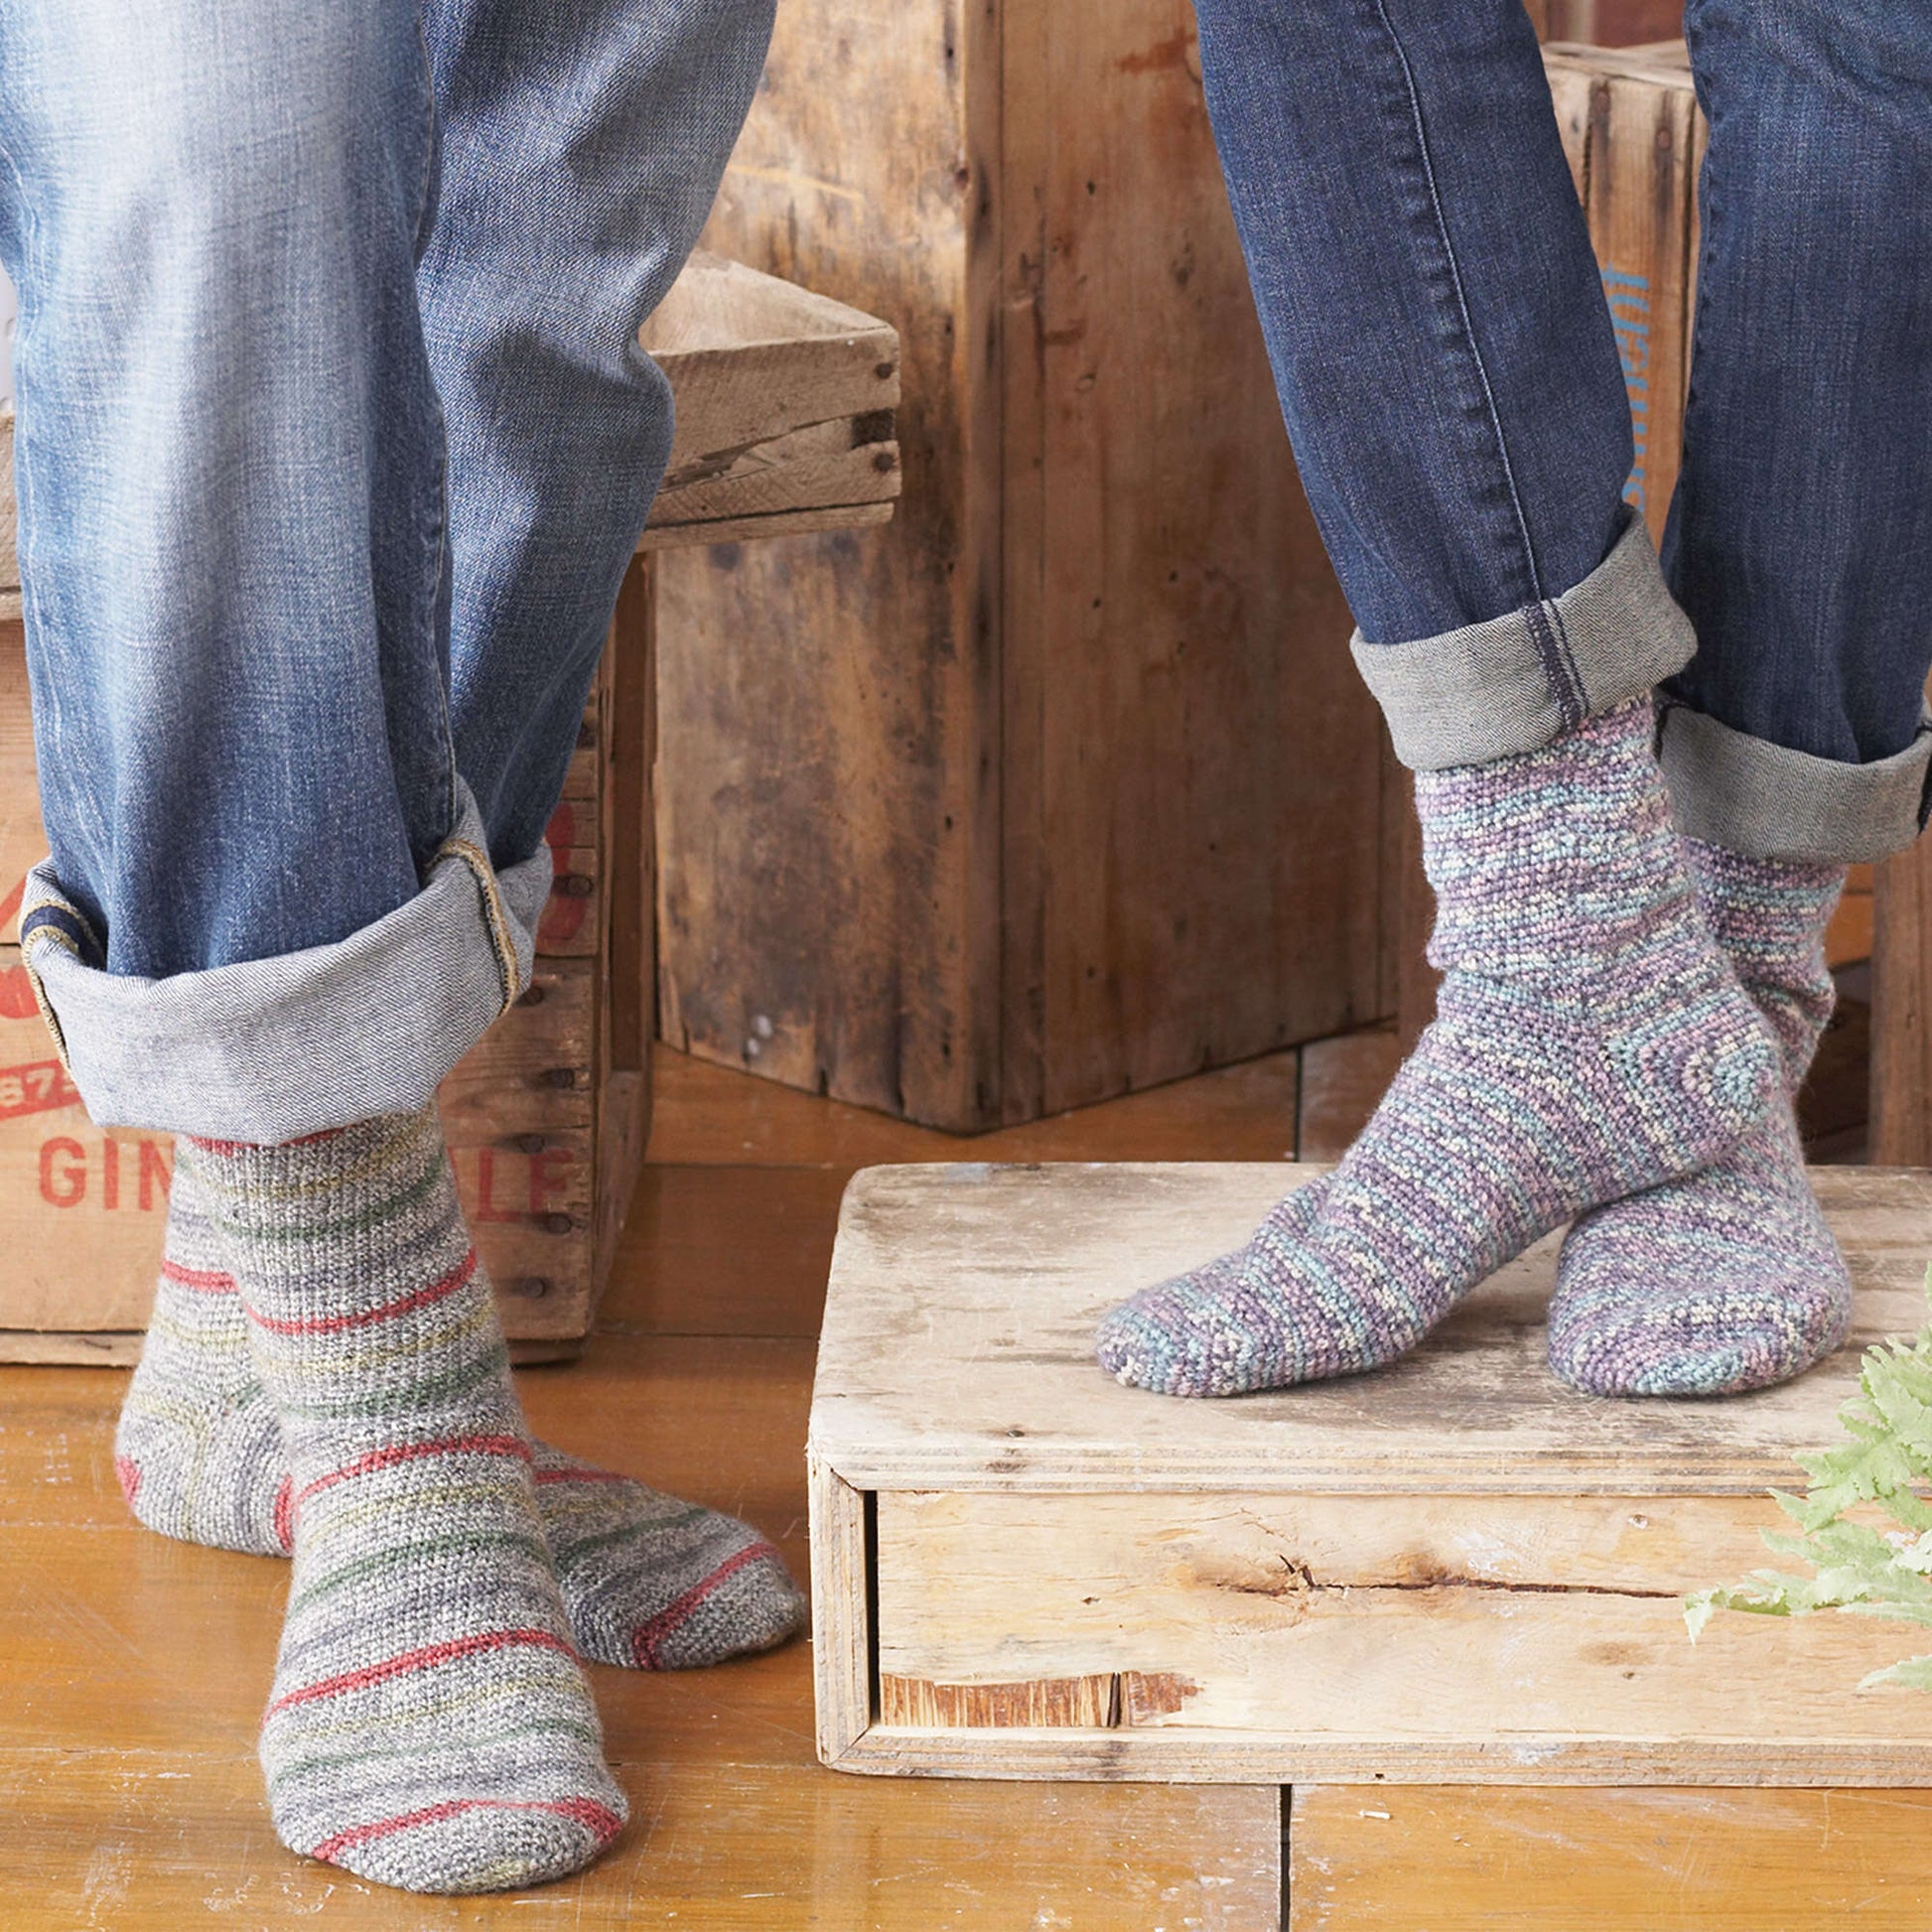 Free Patons Toe Up Socks Crochet Pattern